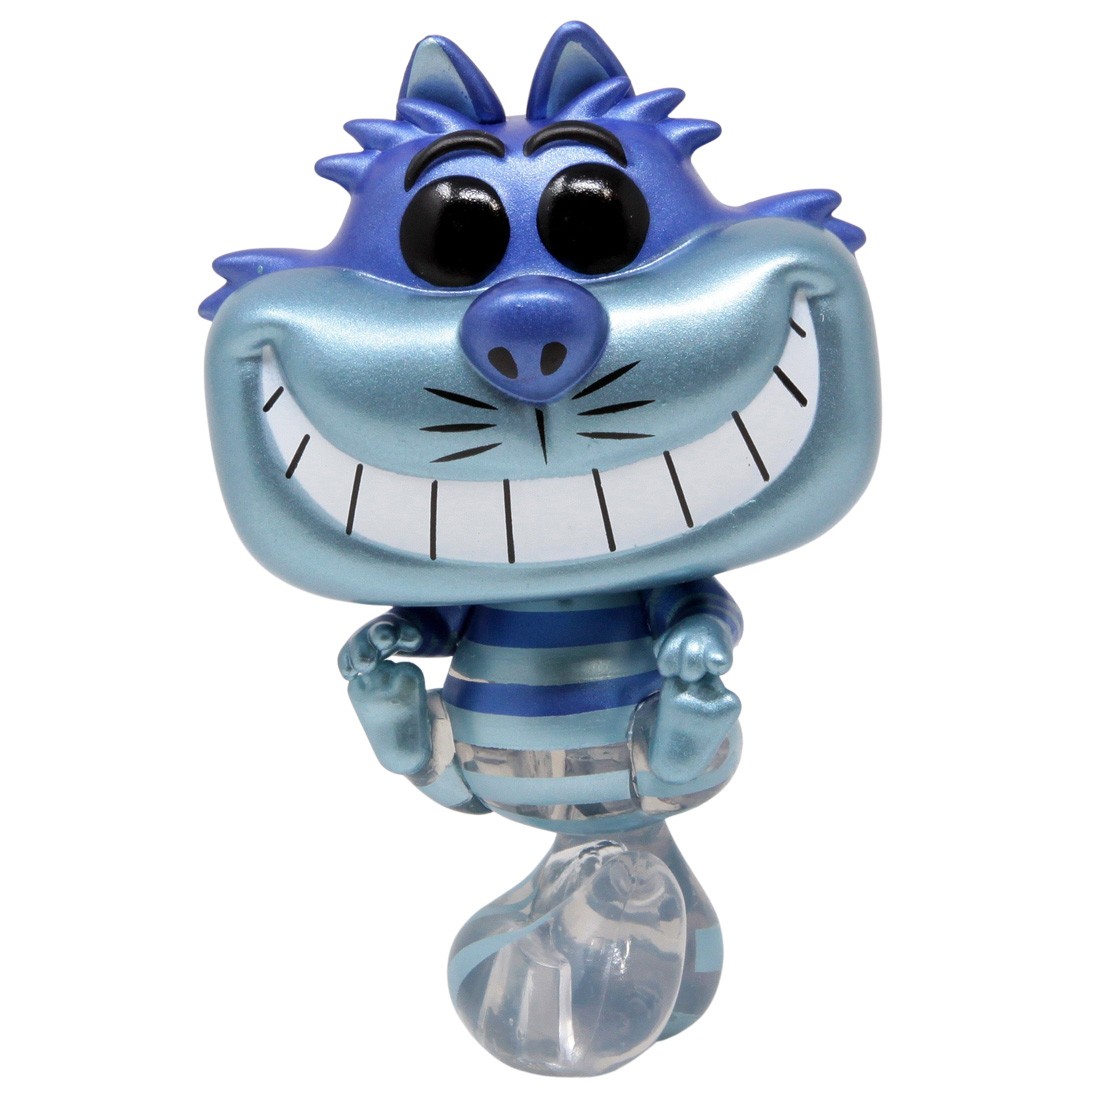 Funko POP With Purpose Disney Make A Wish - Cheshire Cat Metallic (blue)